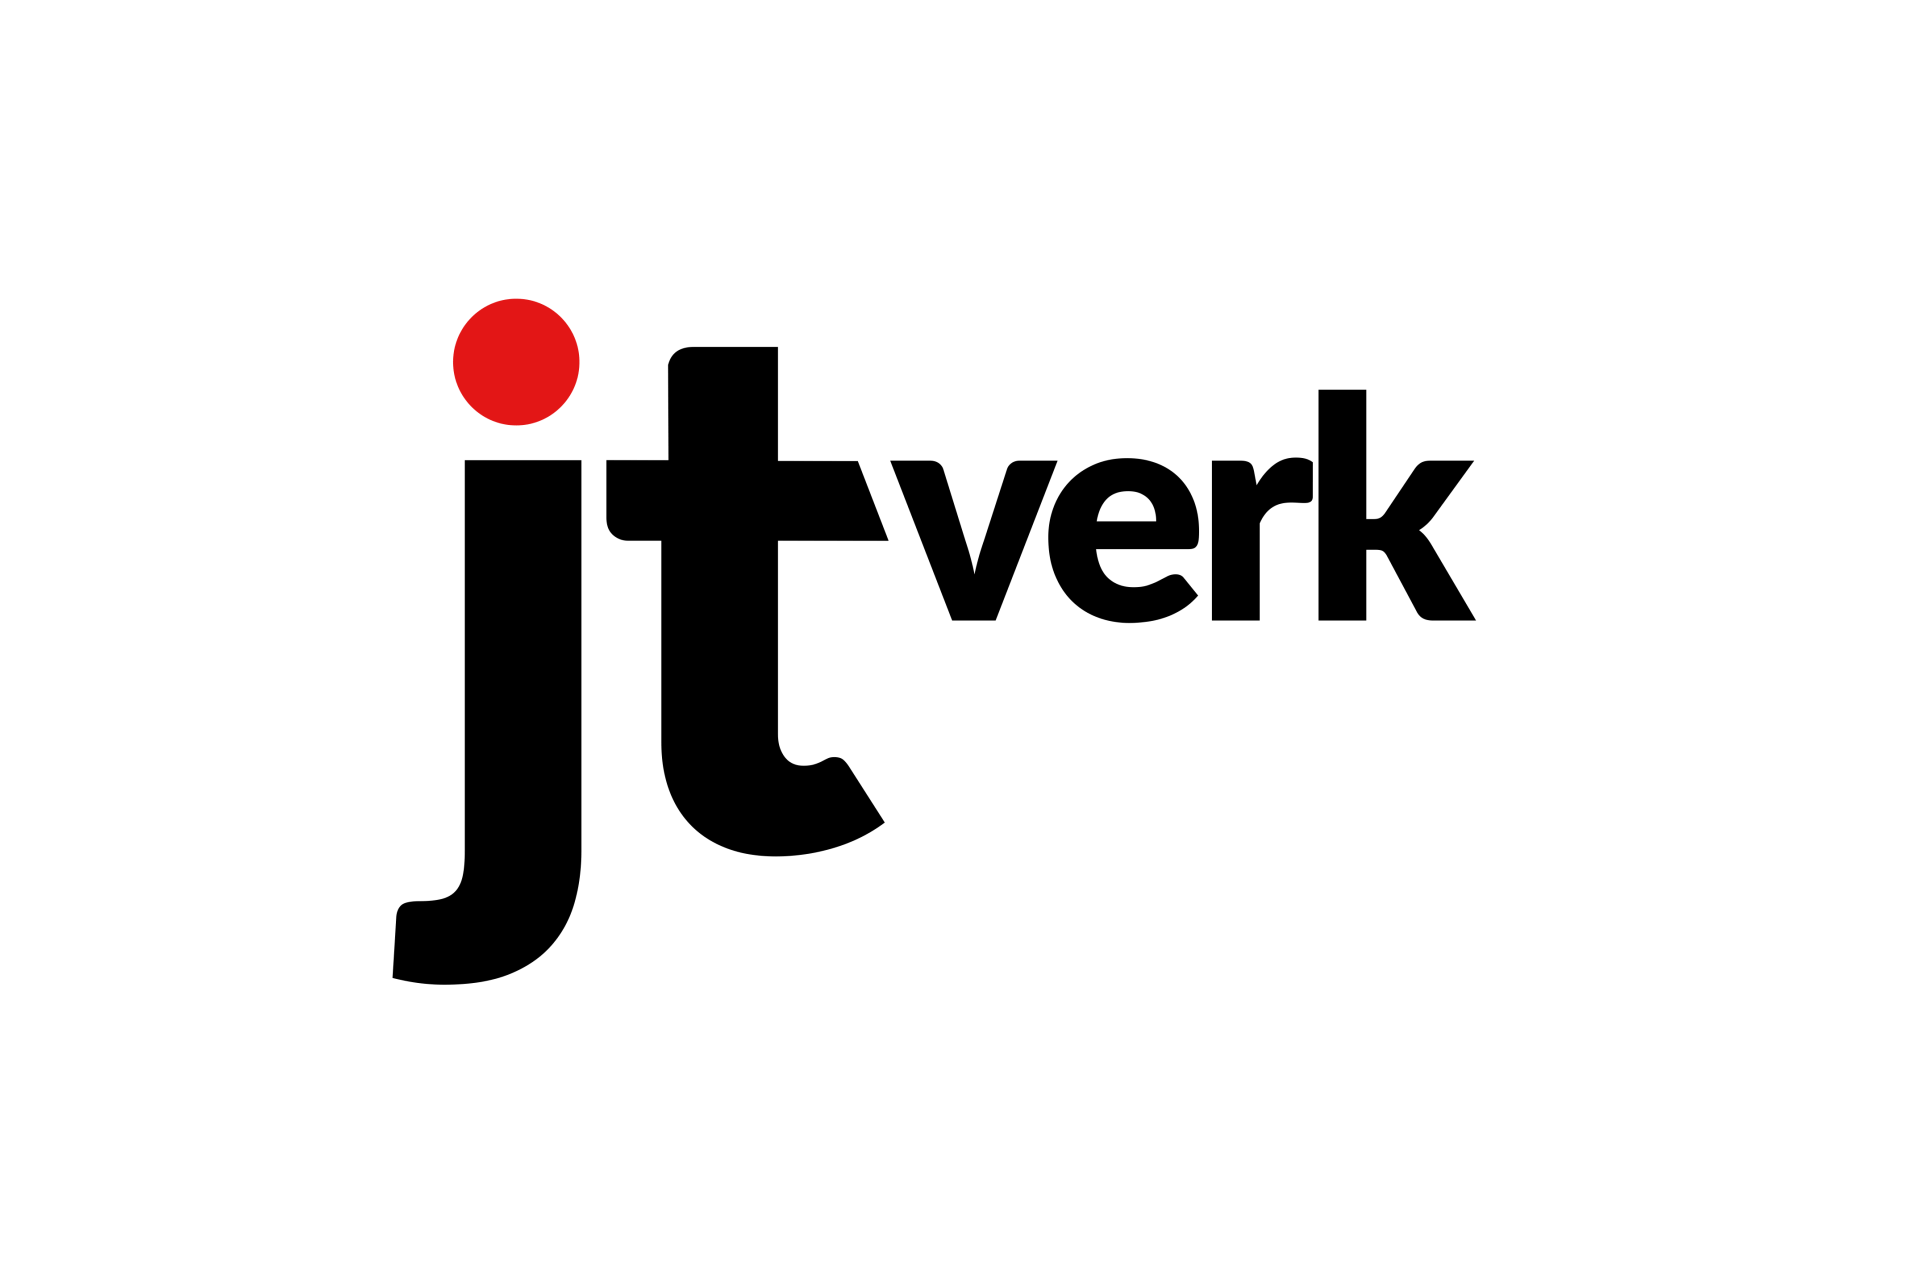 JTverk logo